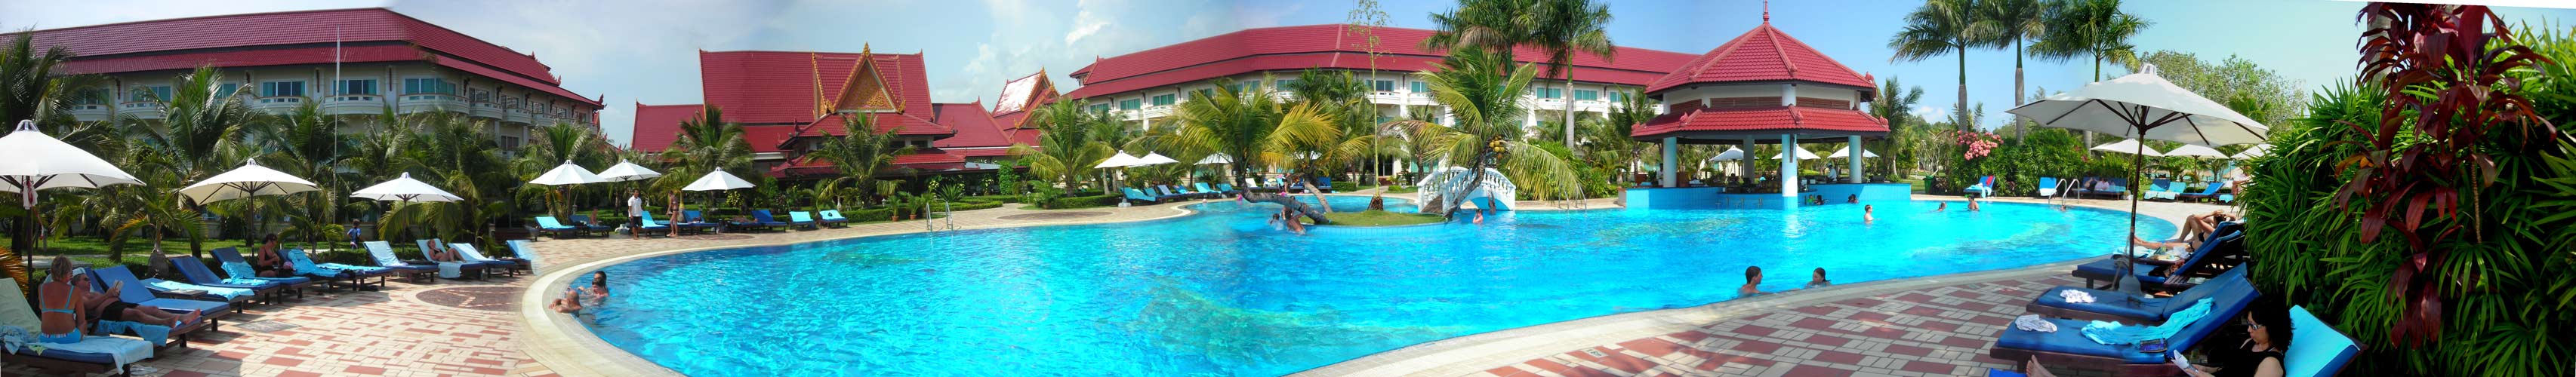 swimming pool at sokha hotel in sihanoukville cambodia